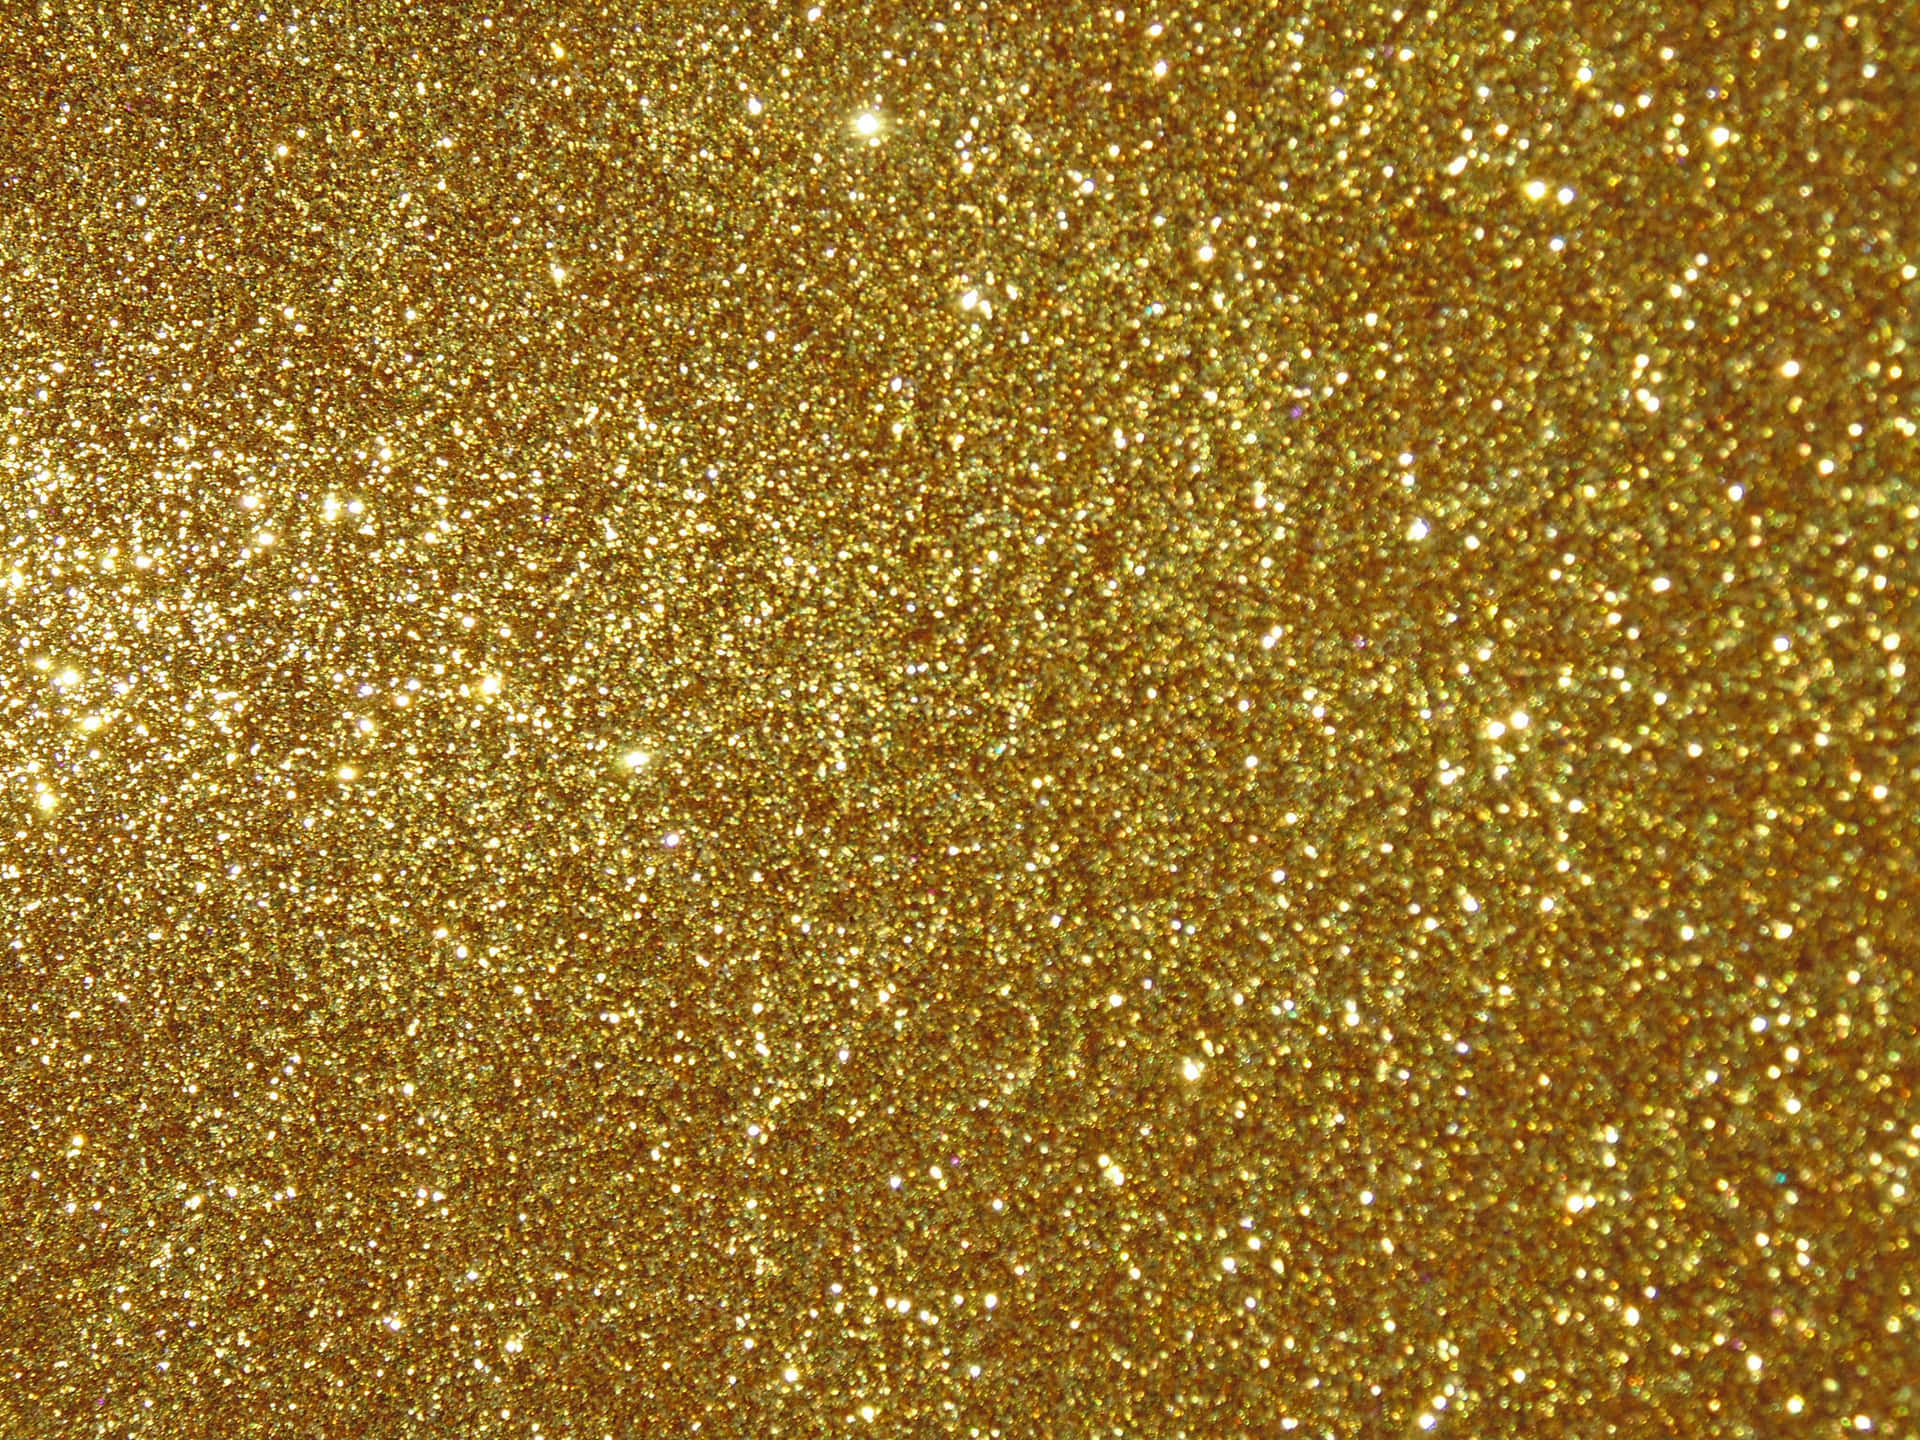 Caption: Enchantingly Sparkling Gold Glitter Texture